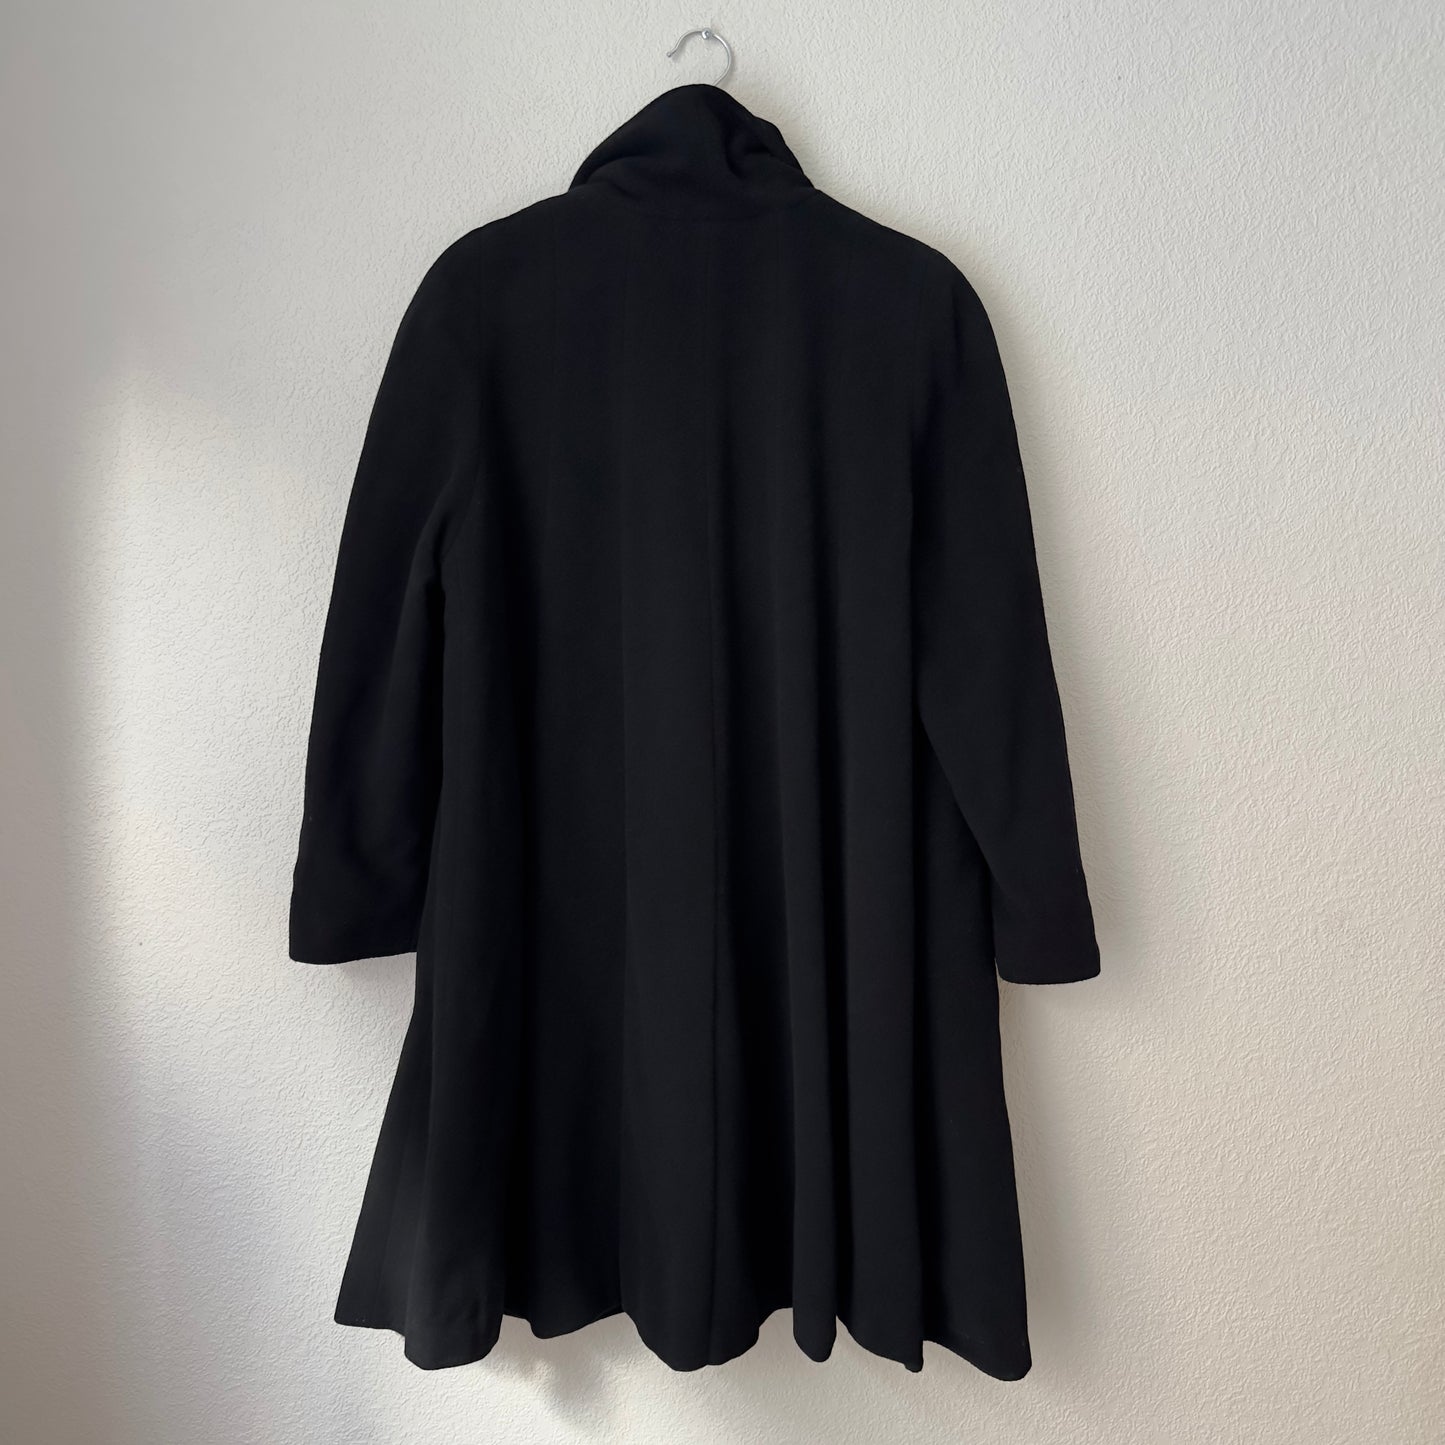 Vintage Black Swing Coat - size S-L